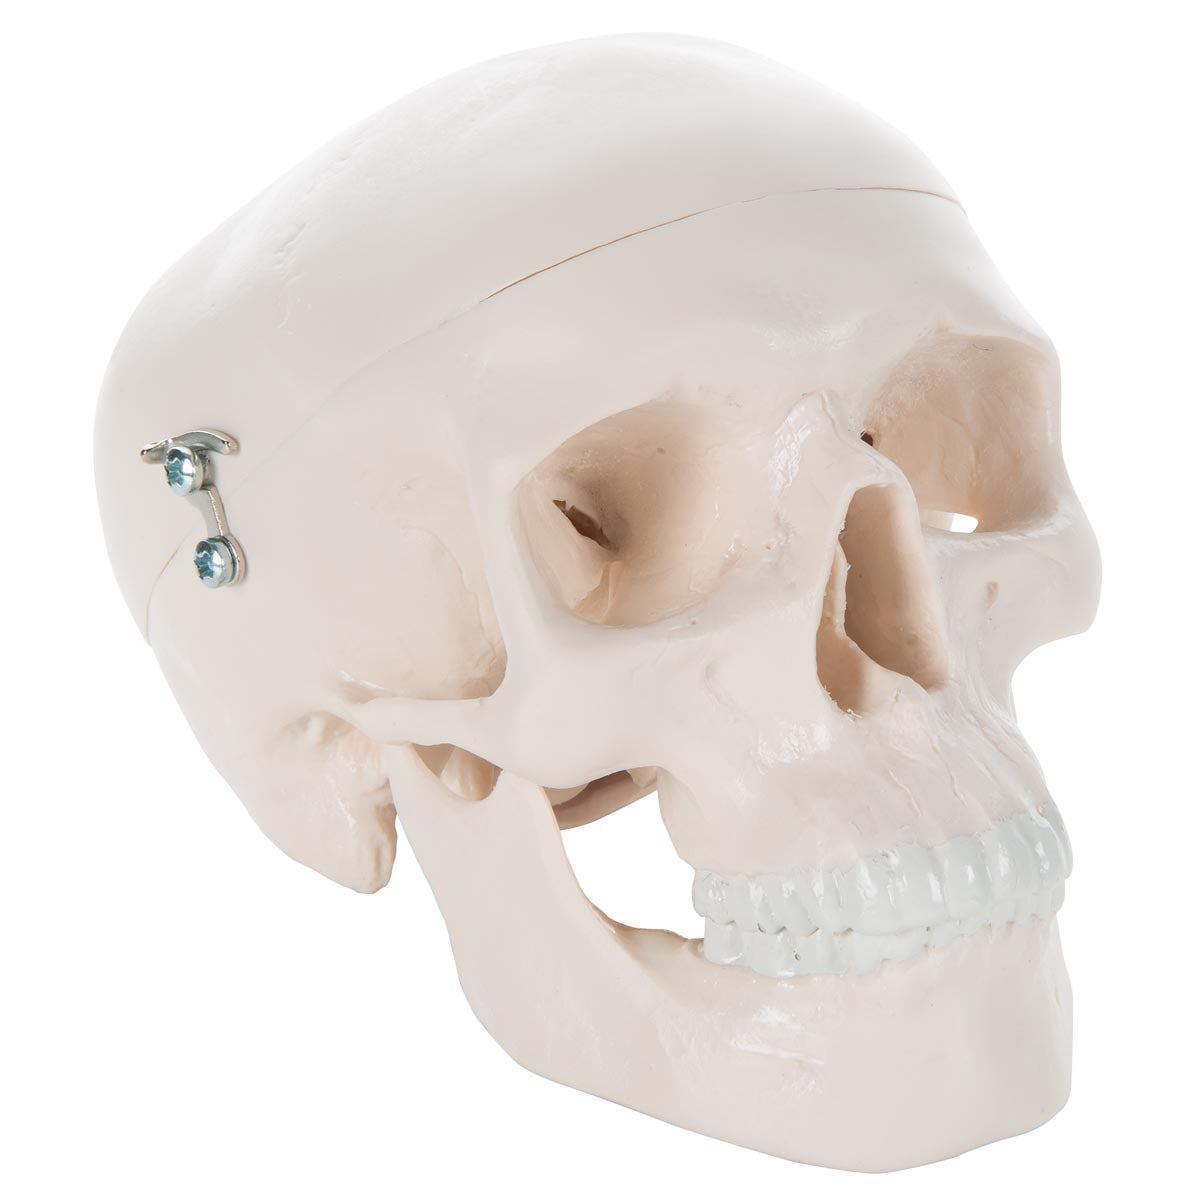 A18/15 Mini Human Skull Model, 3-part (Skullcap, Base of Skull, Mandible) - 3B Smart Anatomy